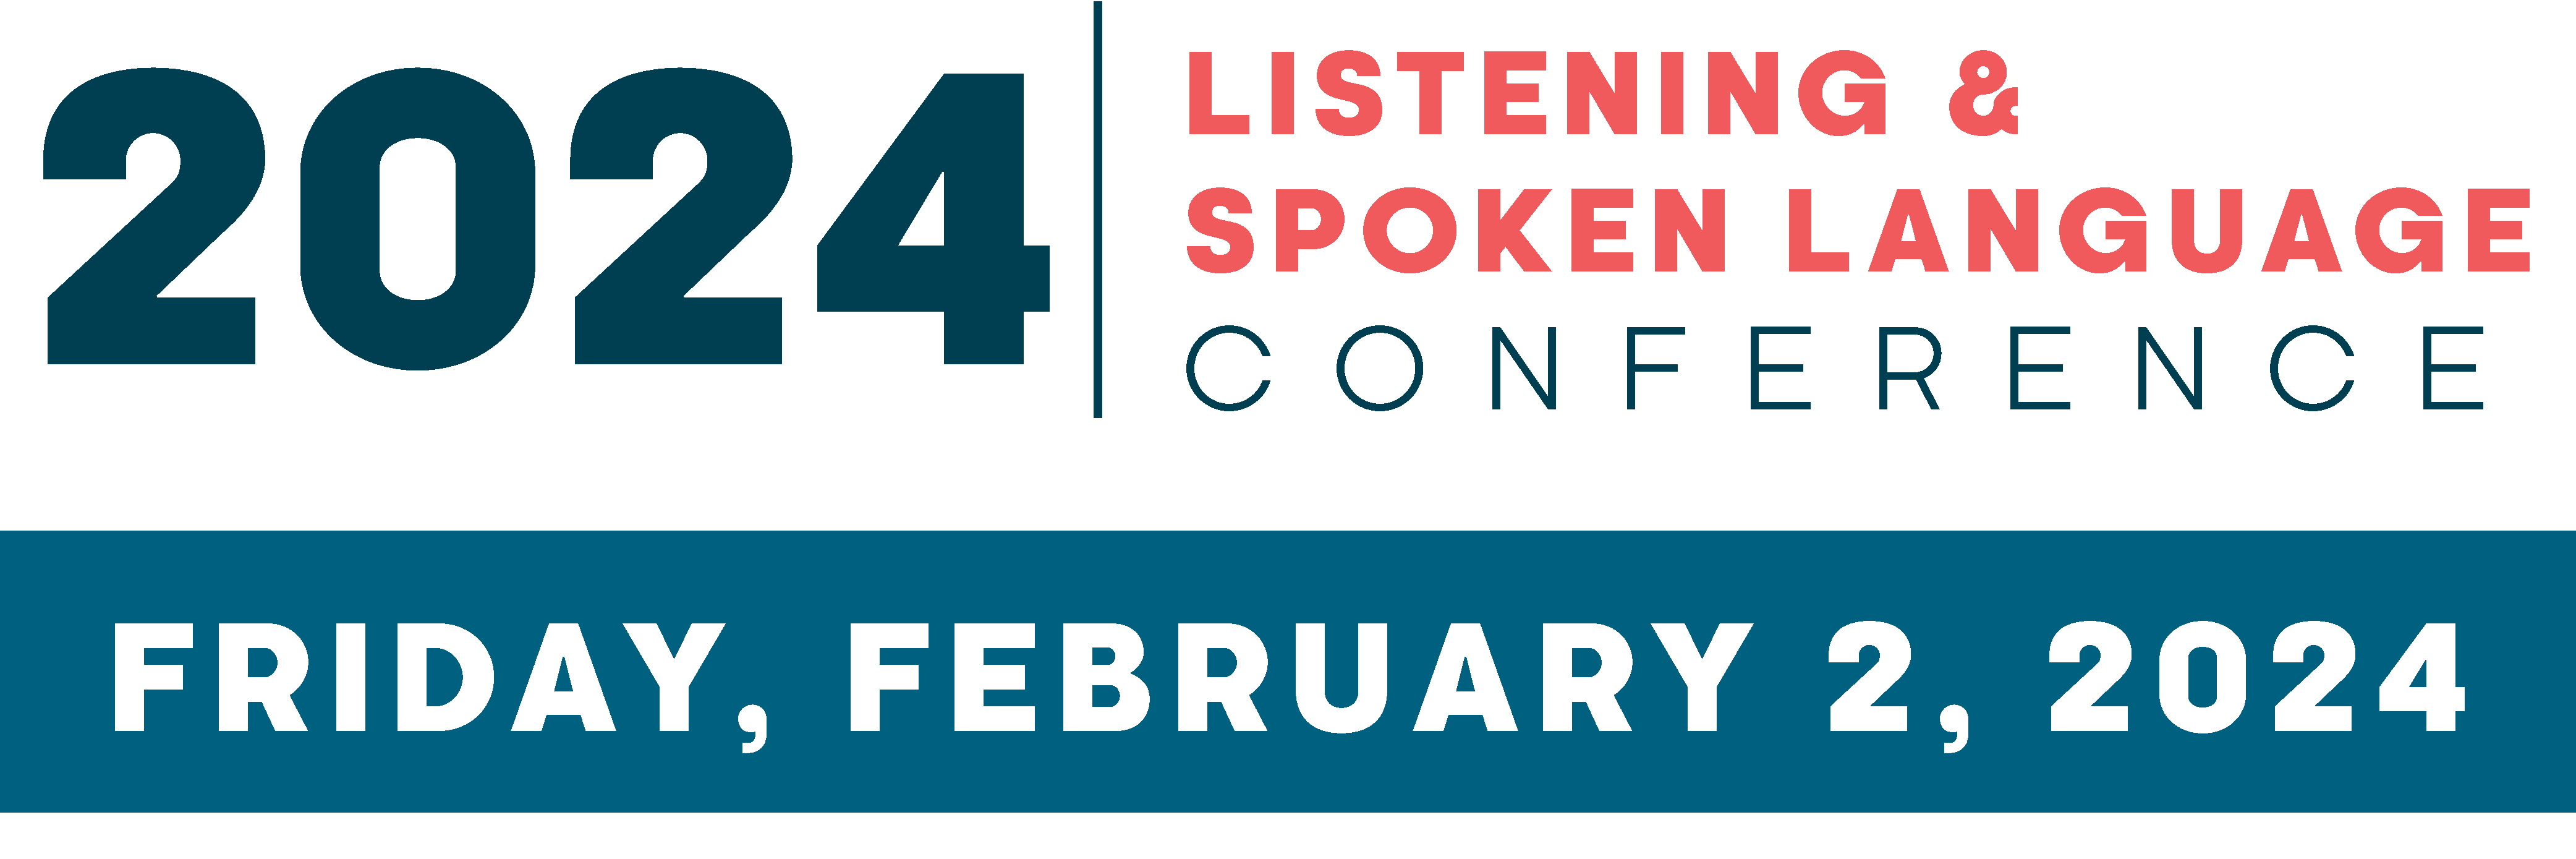 2024 Listening & Spoken Language Conference Hear Indiana